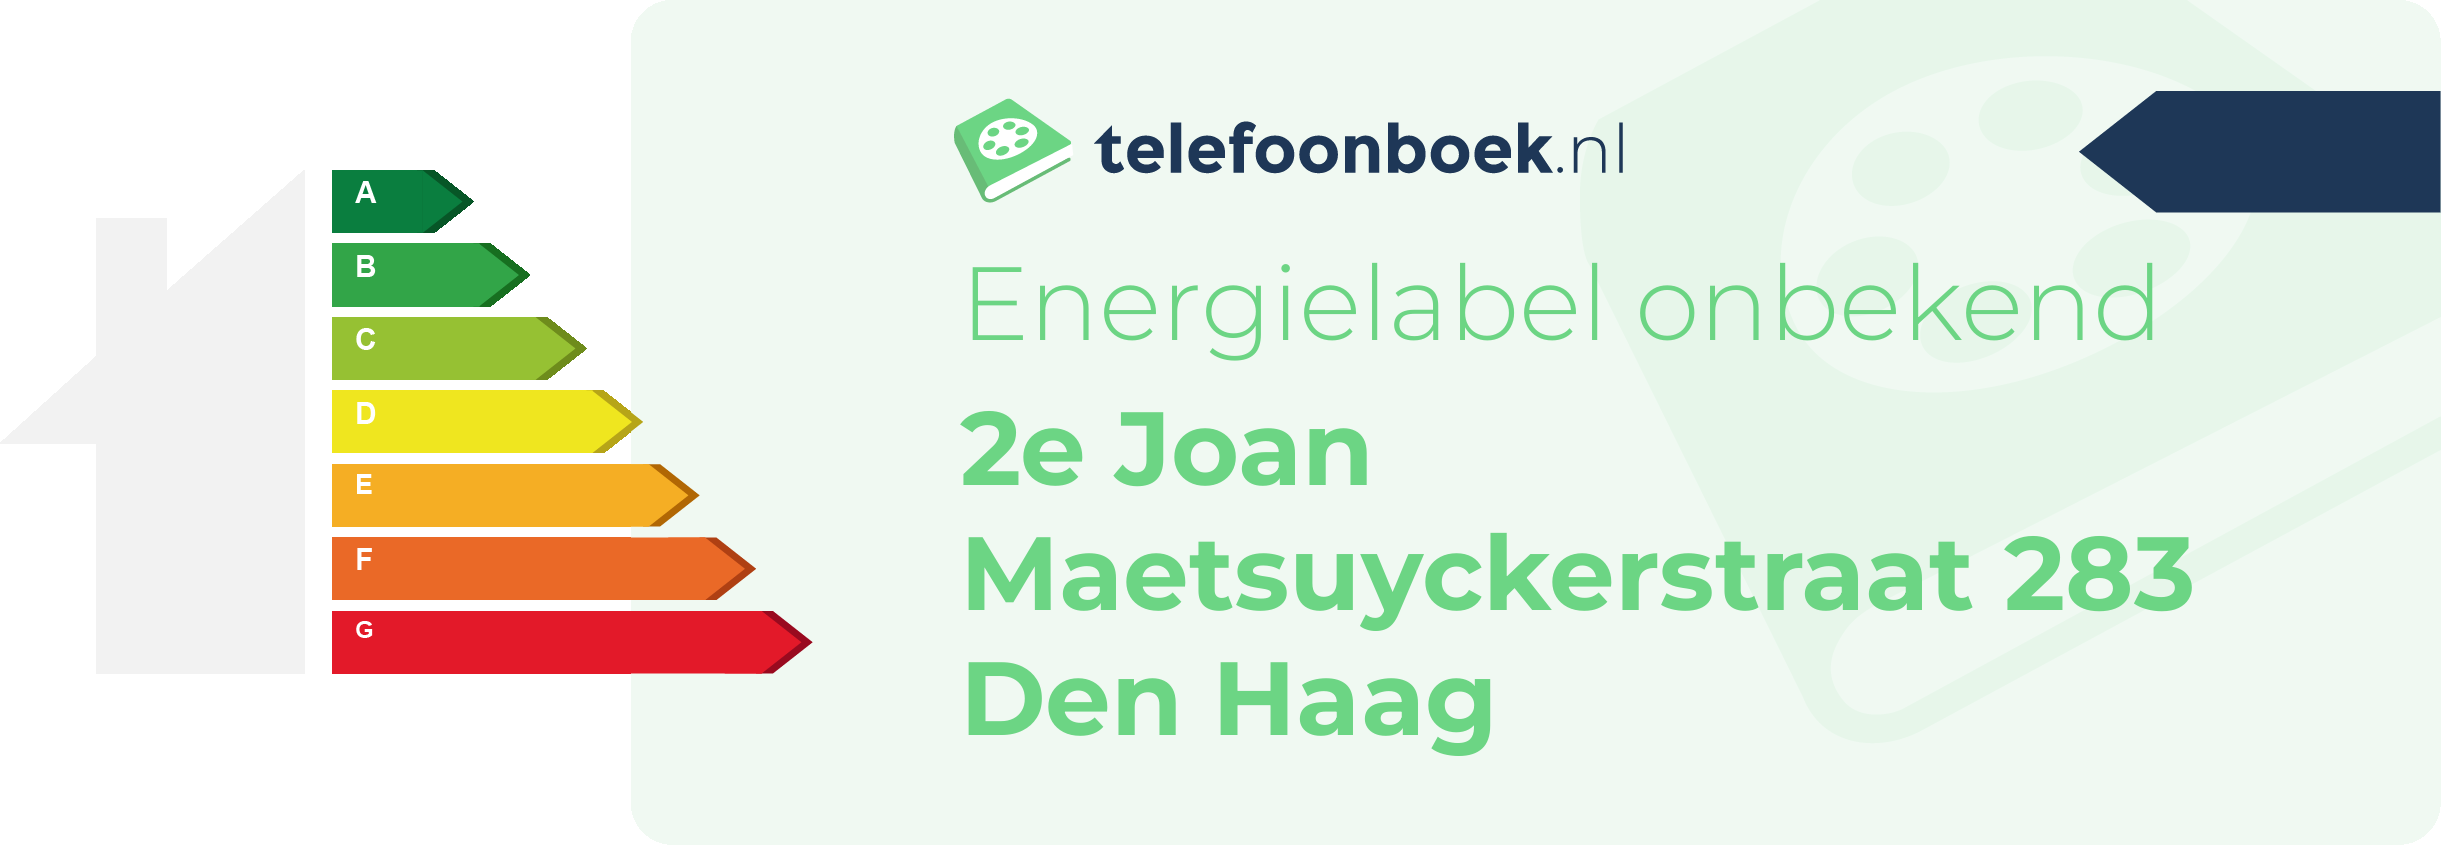 Energielabel 2e Joan Maetsuyckerstraat 283 Den Haag